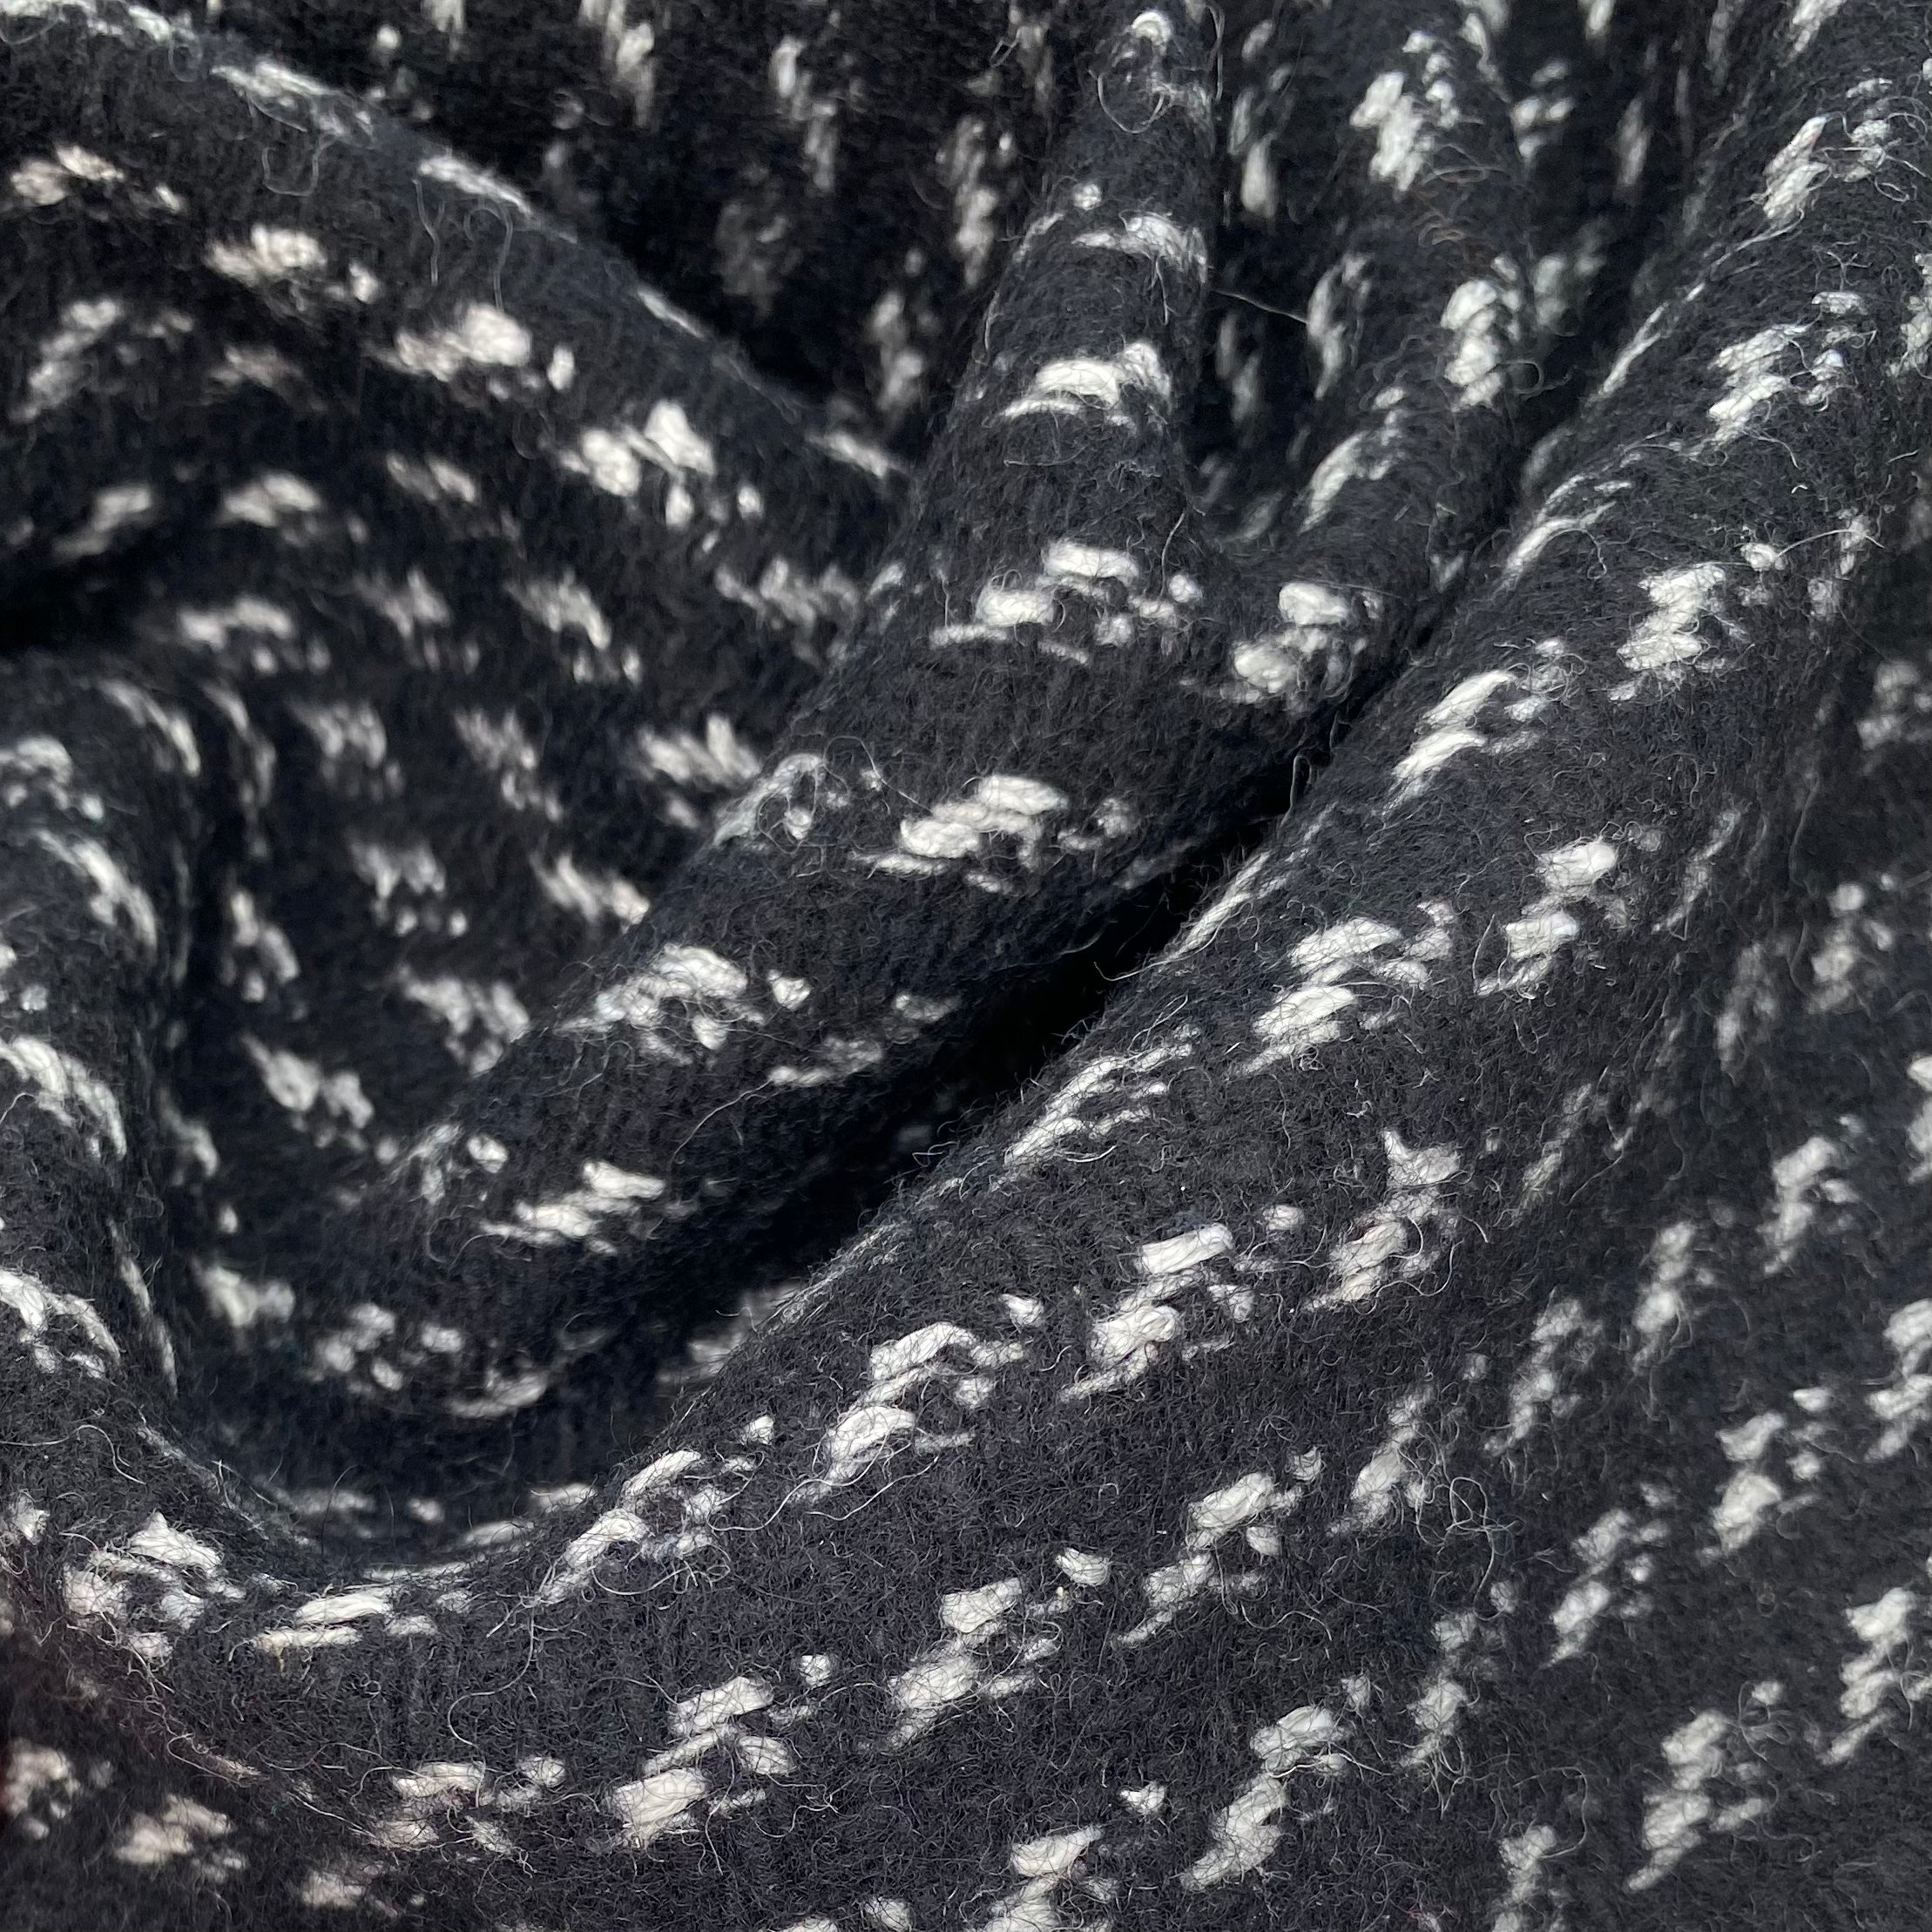 Striped Wool Coating - Remnant - Black/Grey